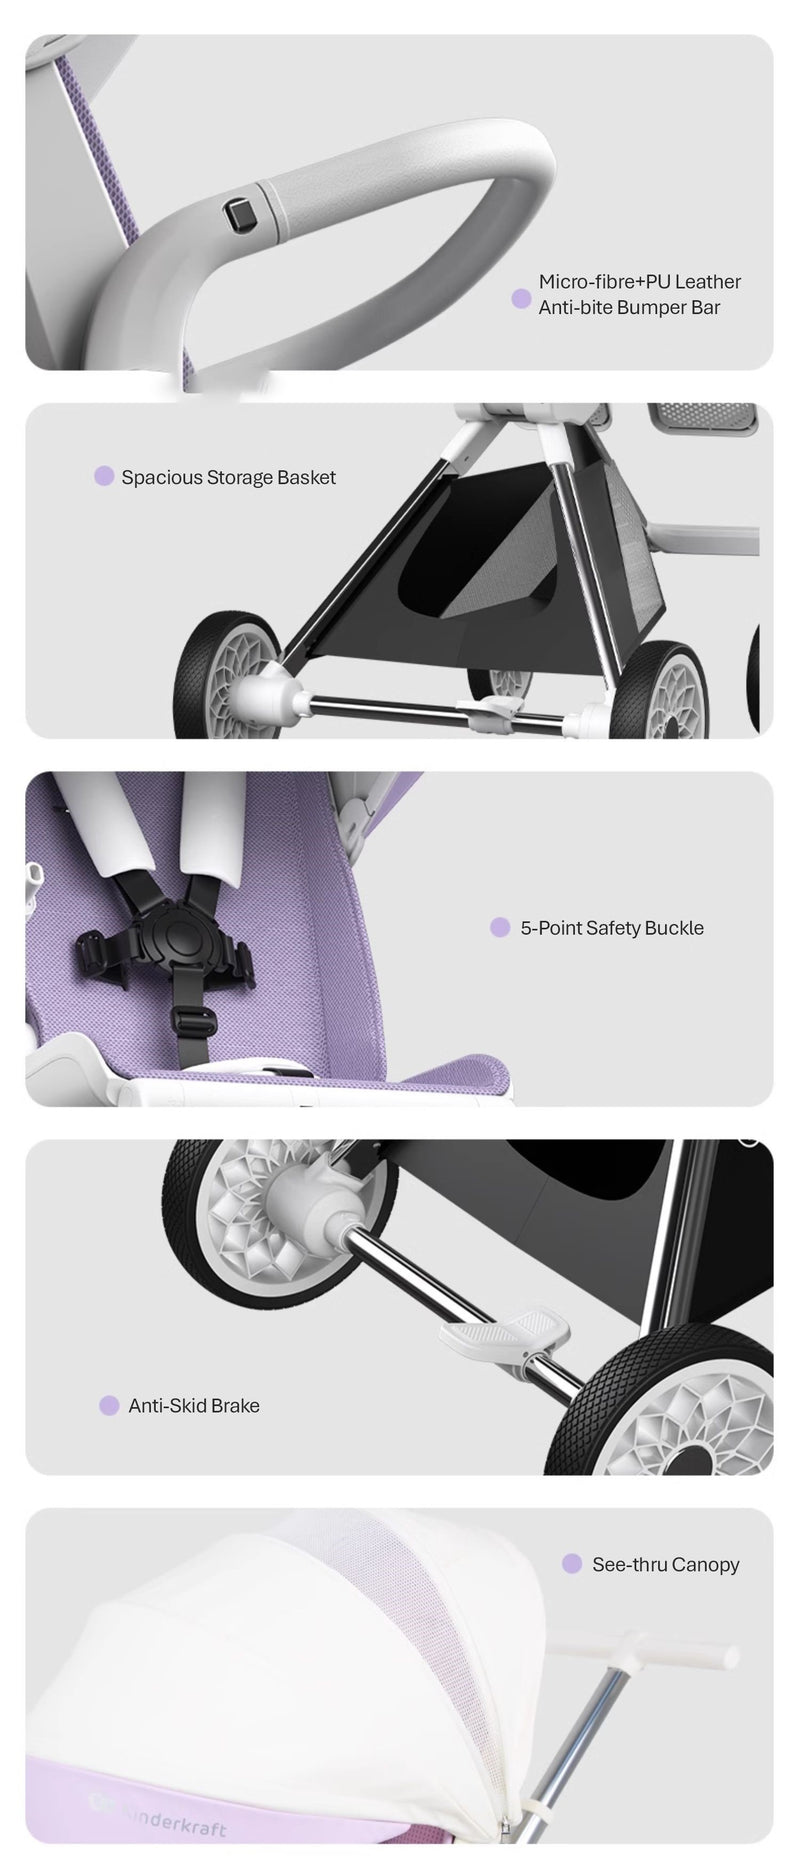 KINDERKRAFT Compact Stroller, KP1, Grey